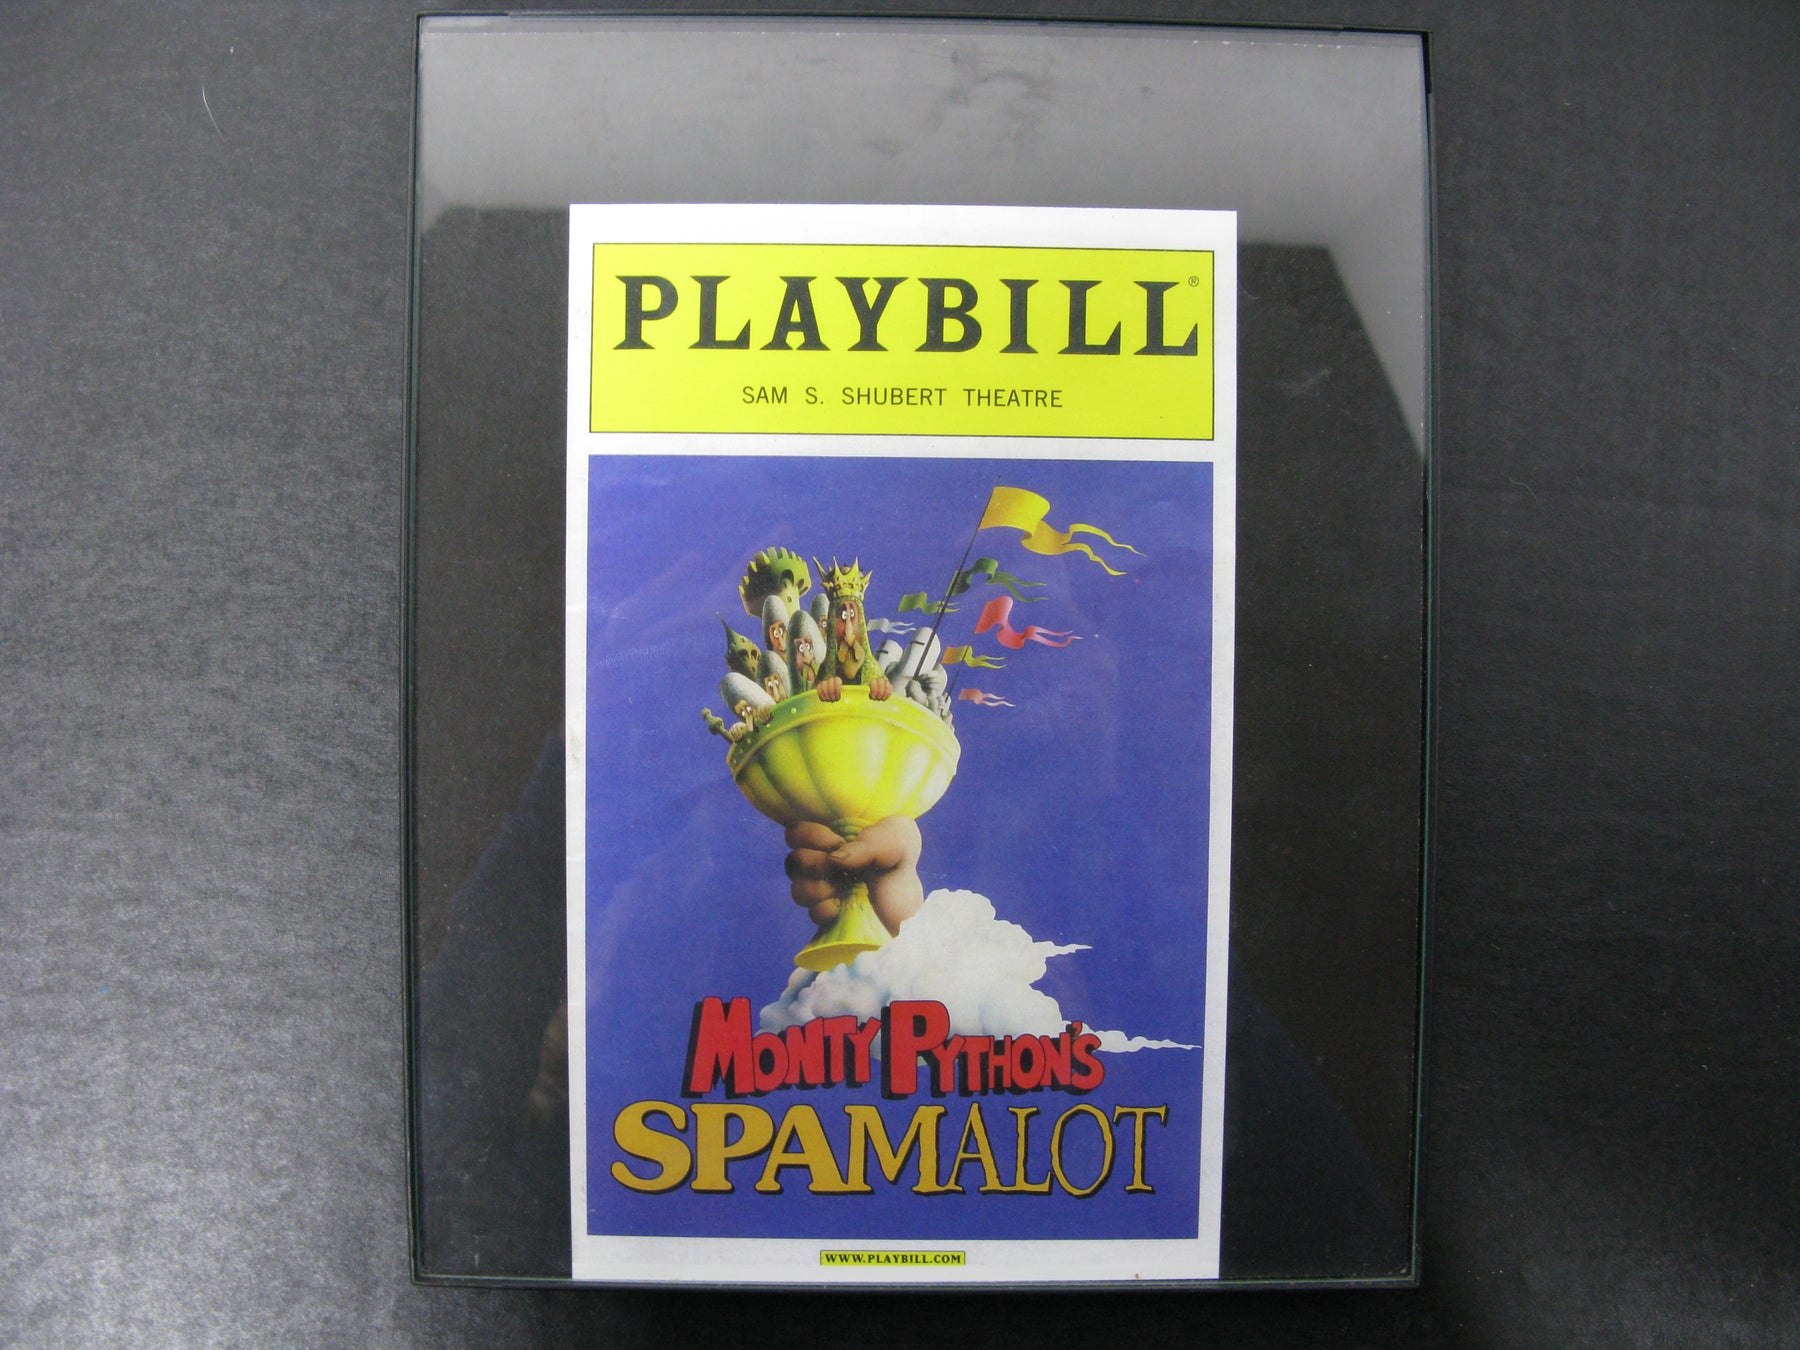 Playbill Sam S. Shubert Theatre Monty Python's Spamalot